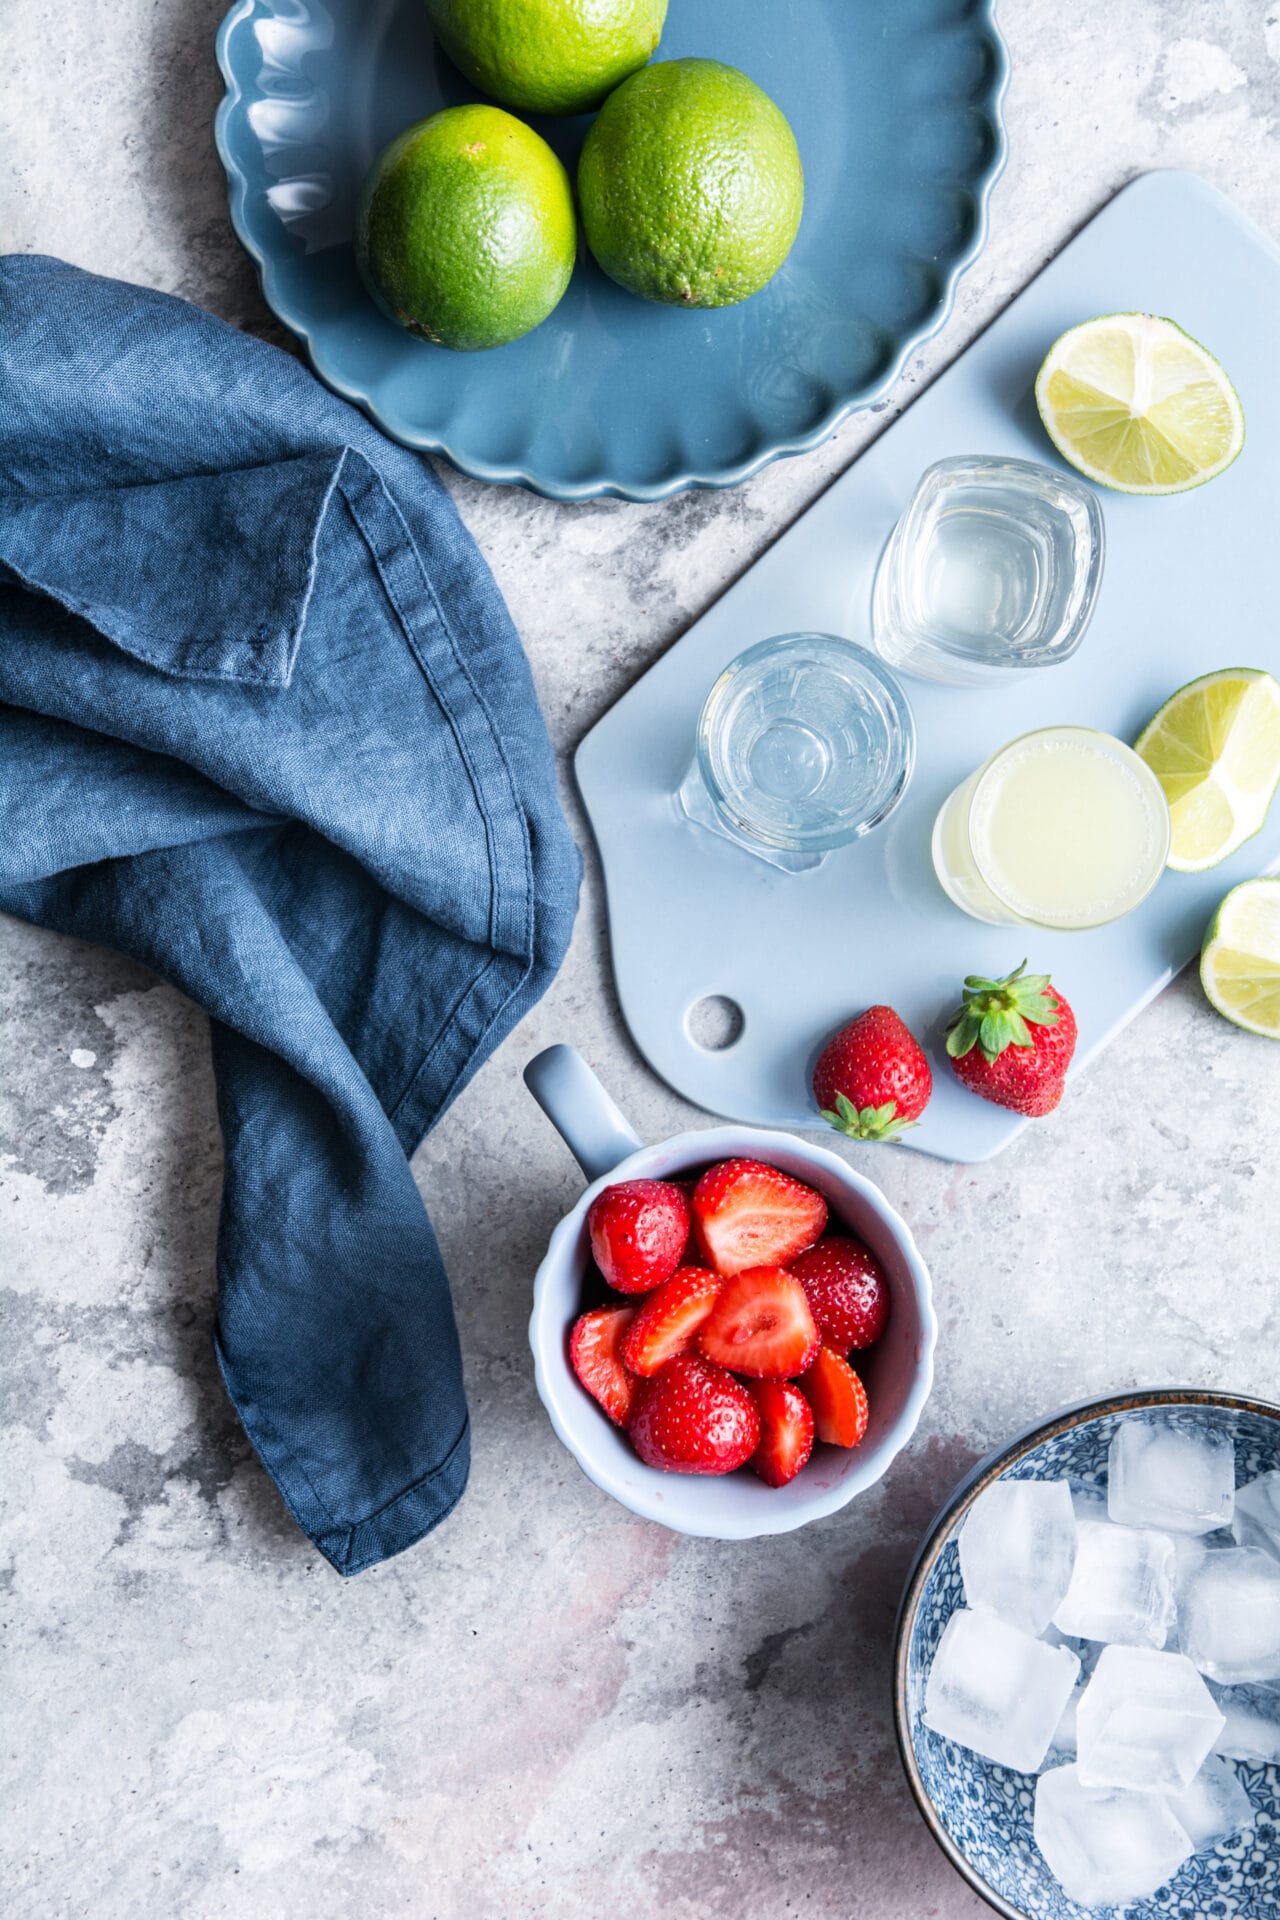 How to Make a Perfect Strawberry Daiquiri